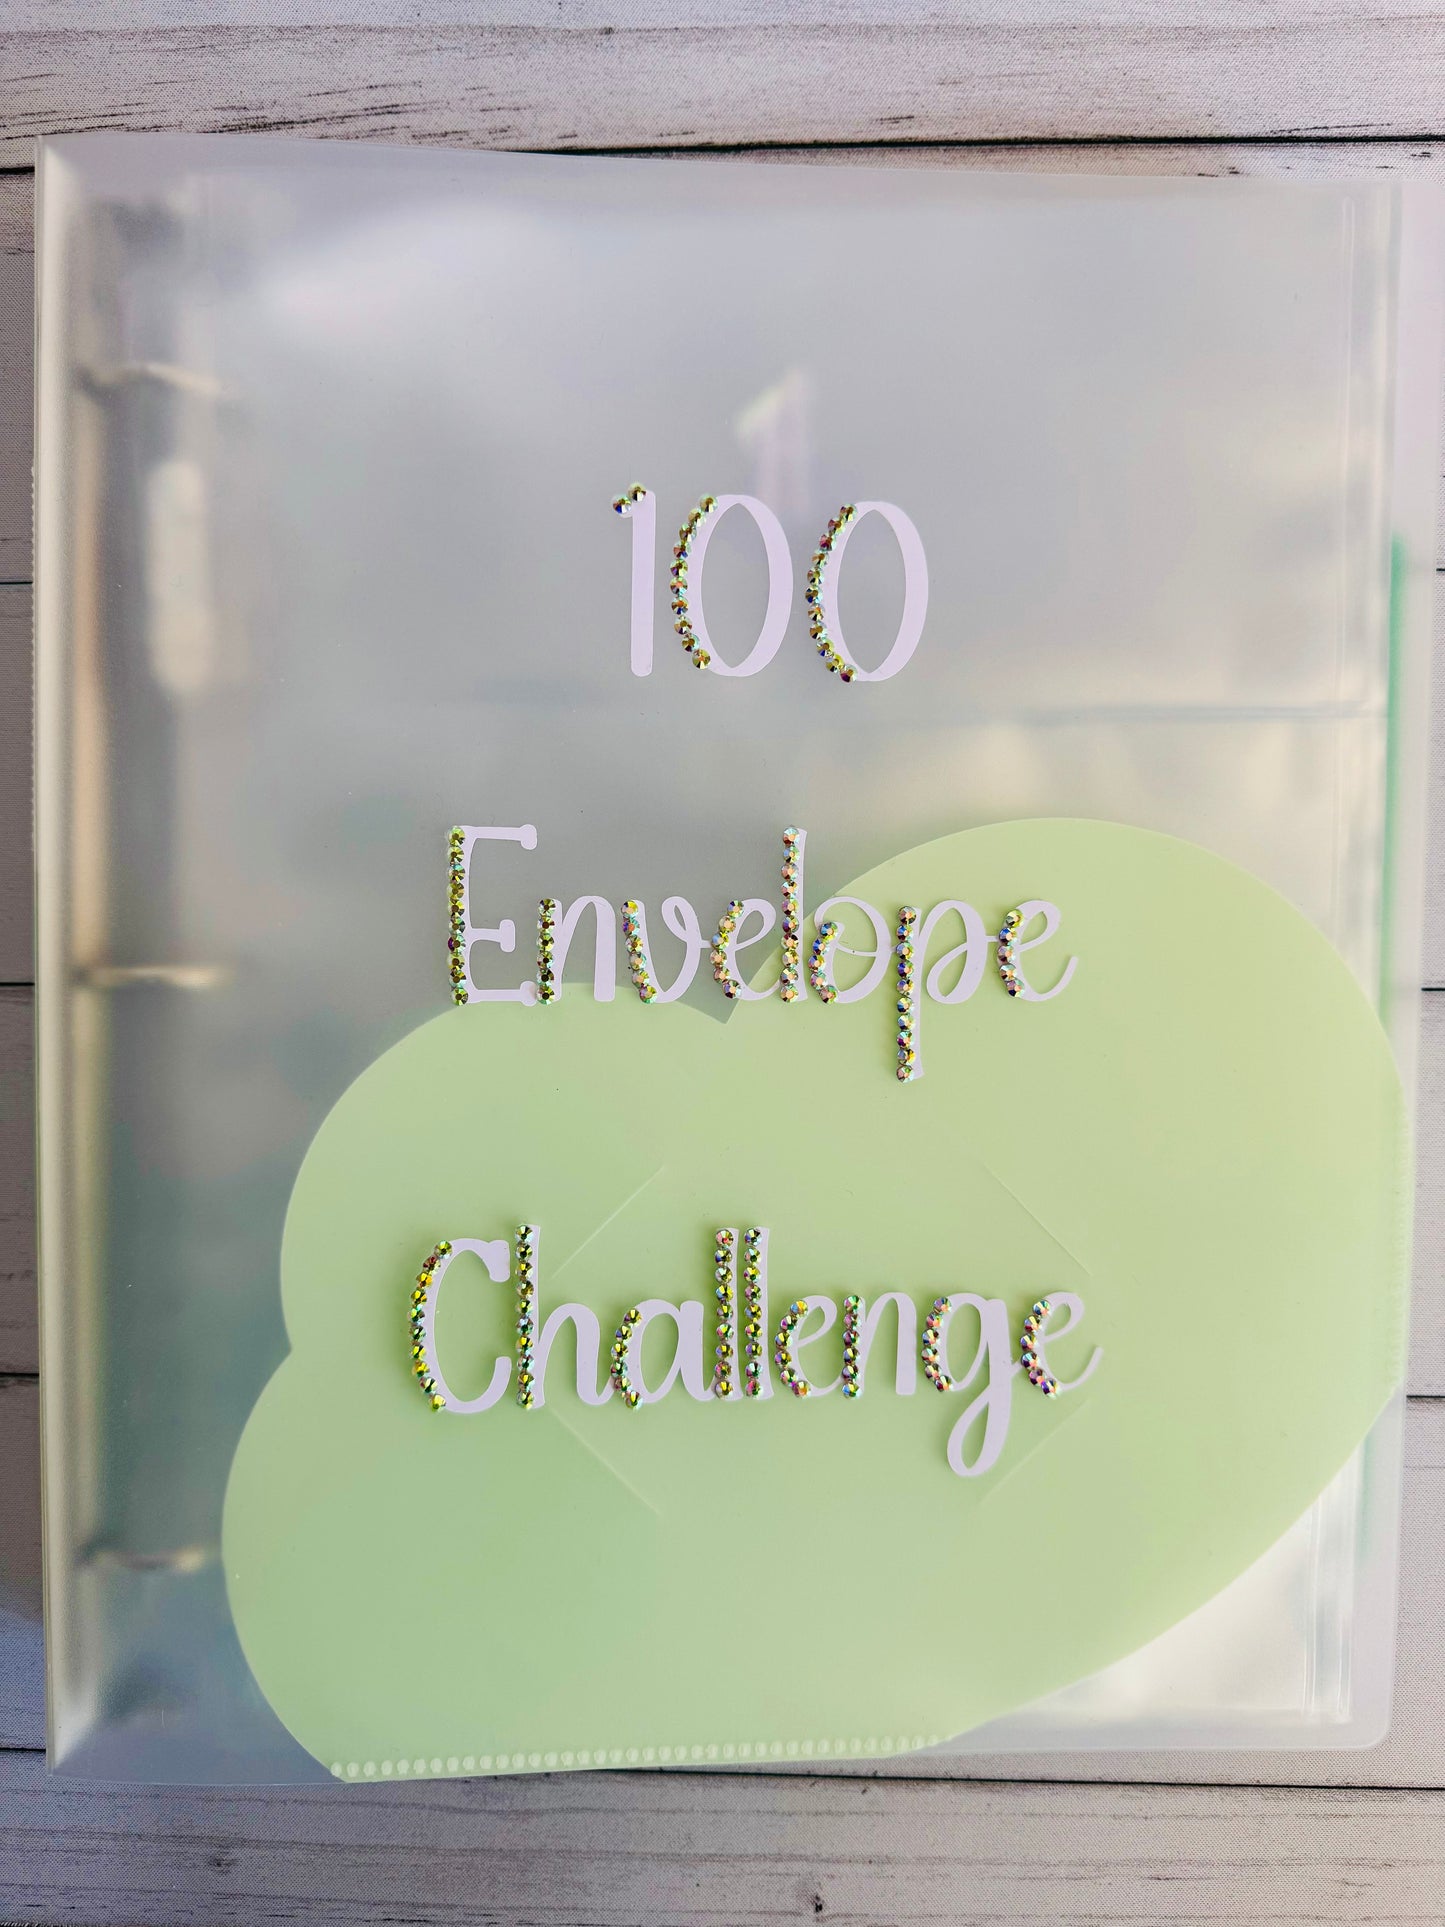 100 Envelope Savings Challenge 3 Ring Cloud Binder With No Folding Your Money